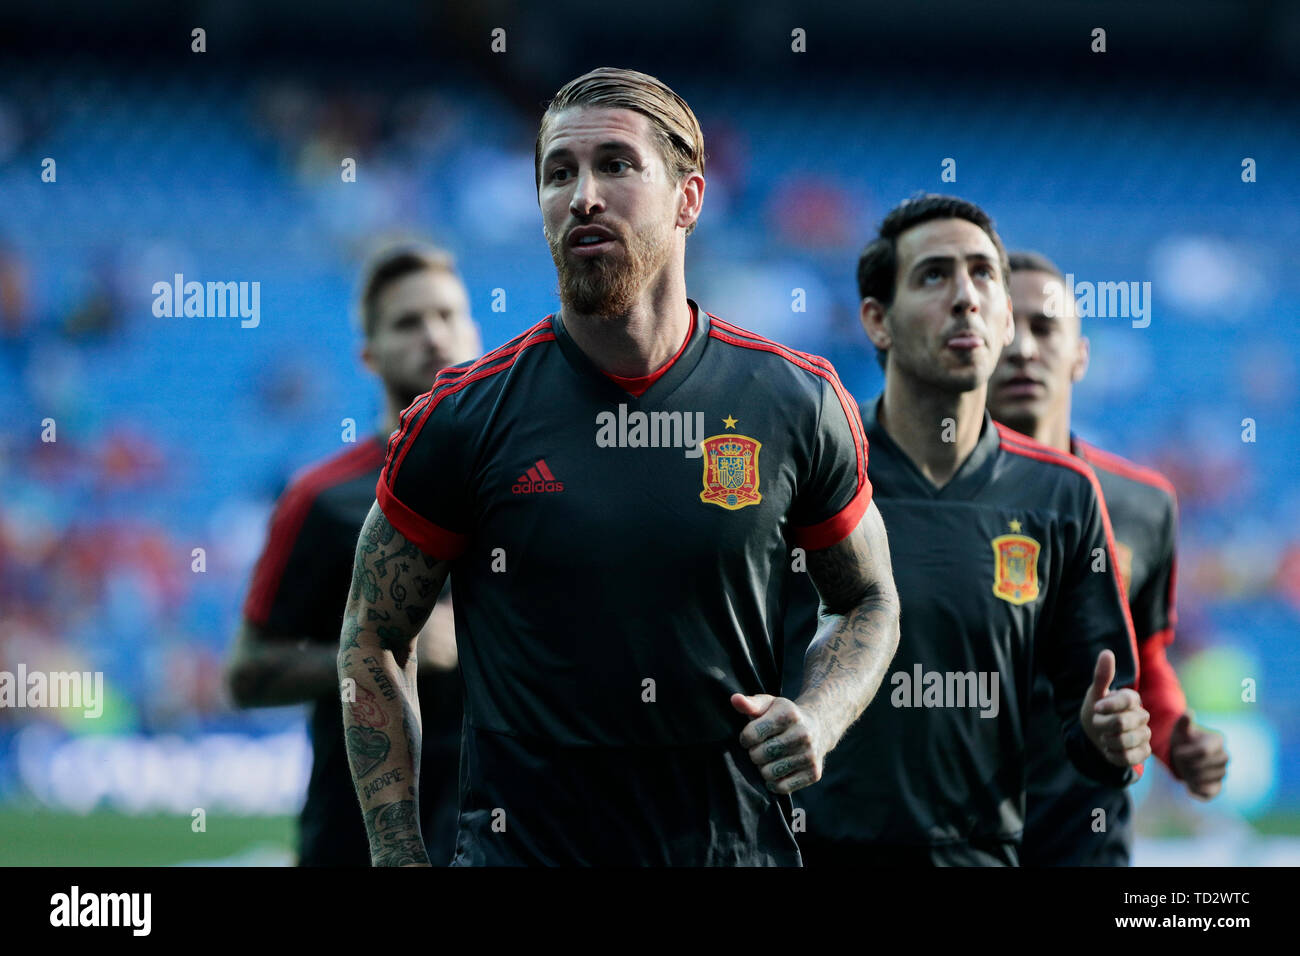 Spagna national team player Sergio Ramos visto durante UEFA EURO 2020 Qualifier match tra la Spagna e la Svezia a Santiago Bernabeu Stadium in Madrid. Punteggio finale: Spagna 3 - Svezia 0 Foto Stock